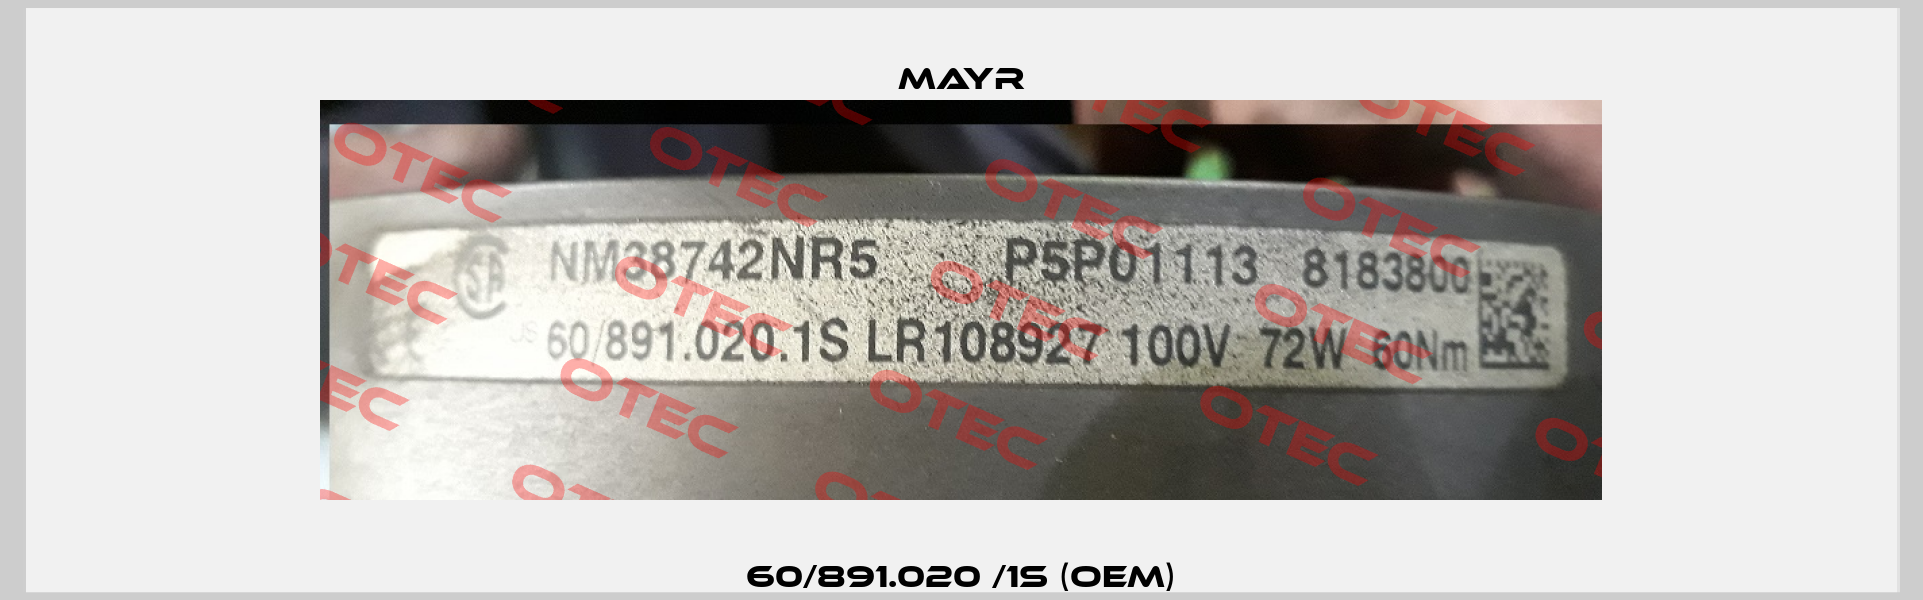 60/891.020 /1S (OEM) Mayr